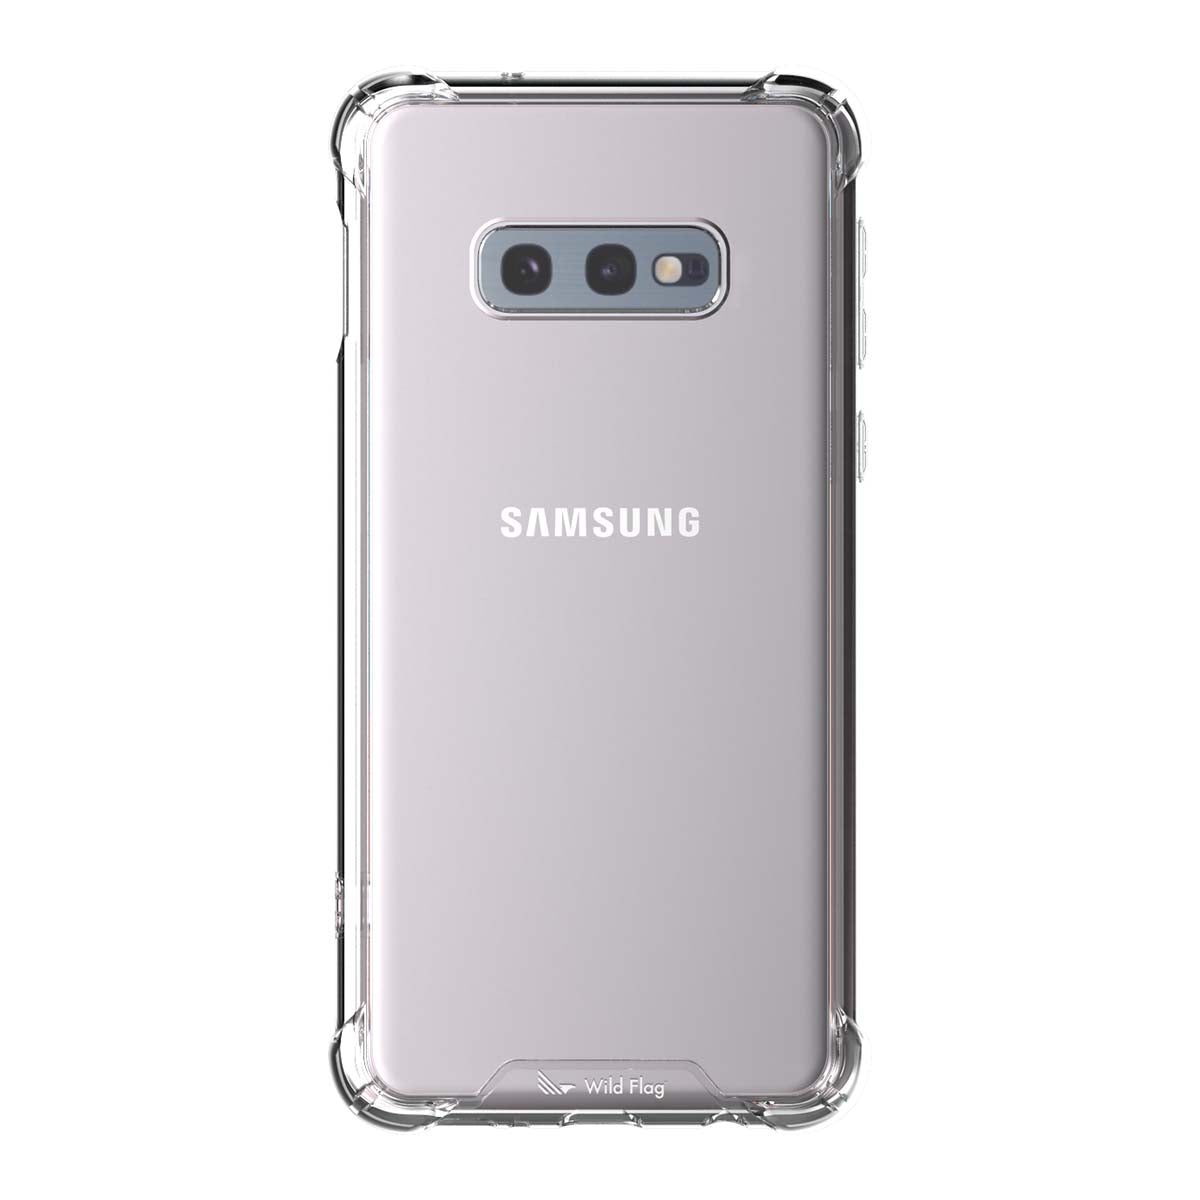 Samsung Galaxy S10 Deals!